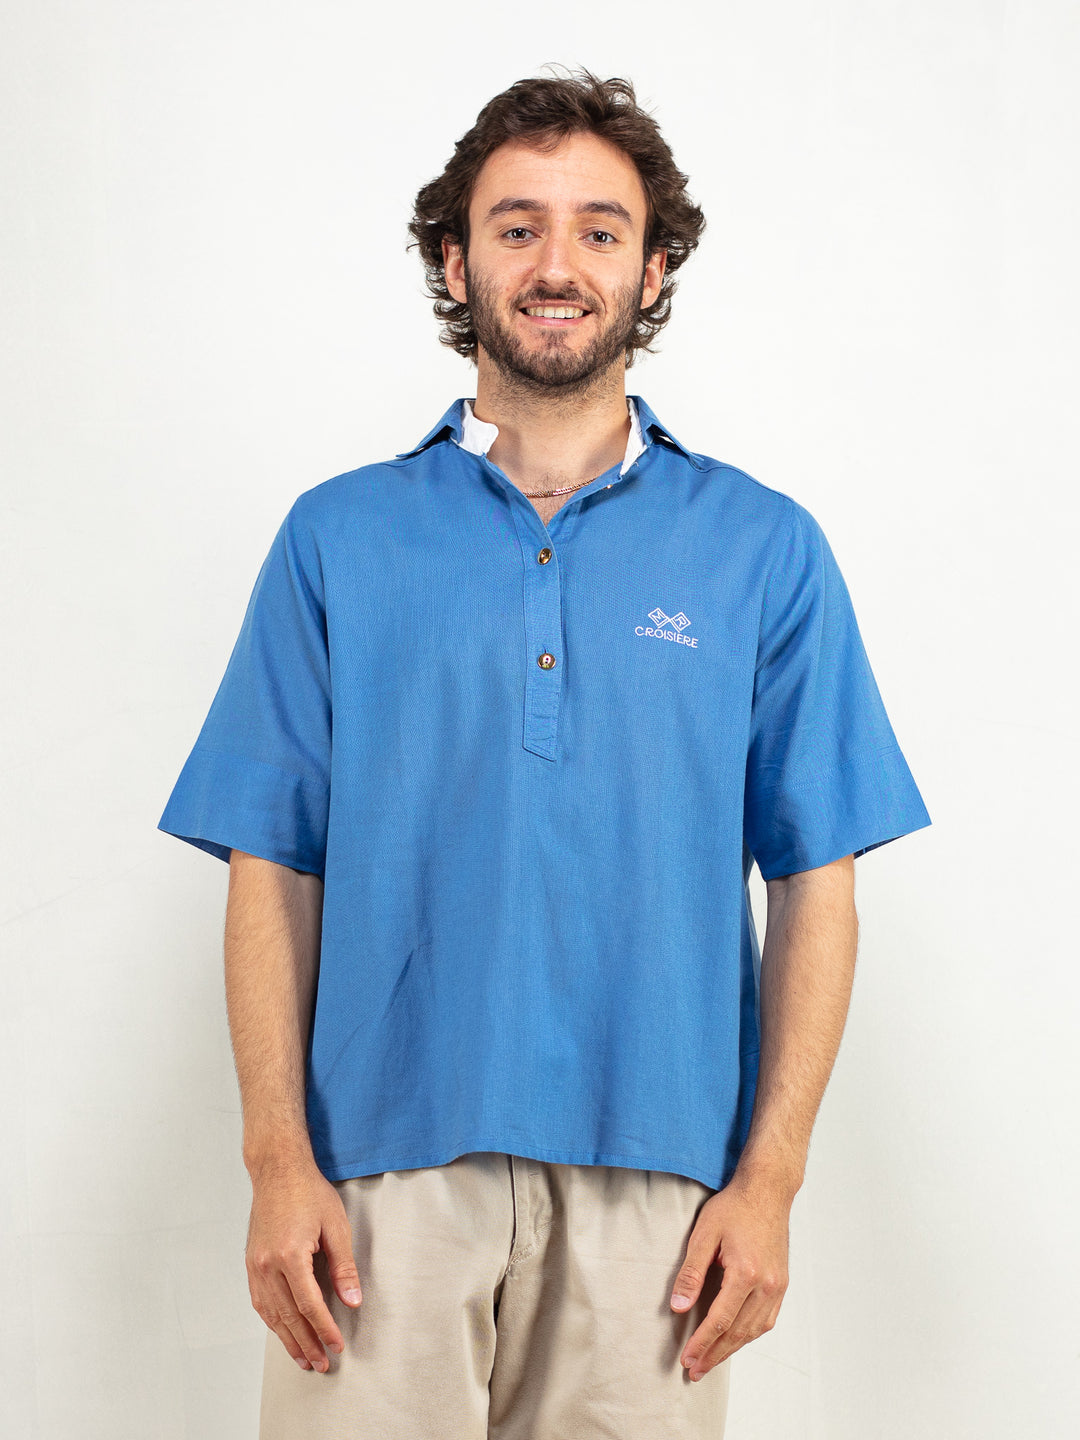 Men Polo Shirt 90's vintage light summer shirt short sleeve blue shirt soft collarless minimalist modern shirt men clothing size medium m